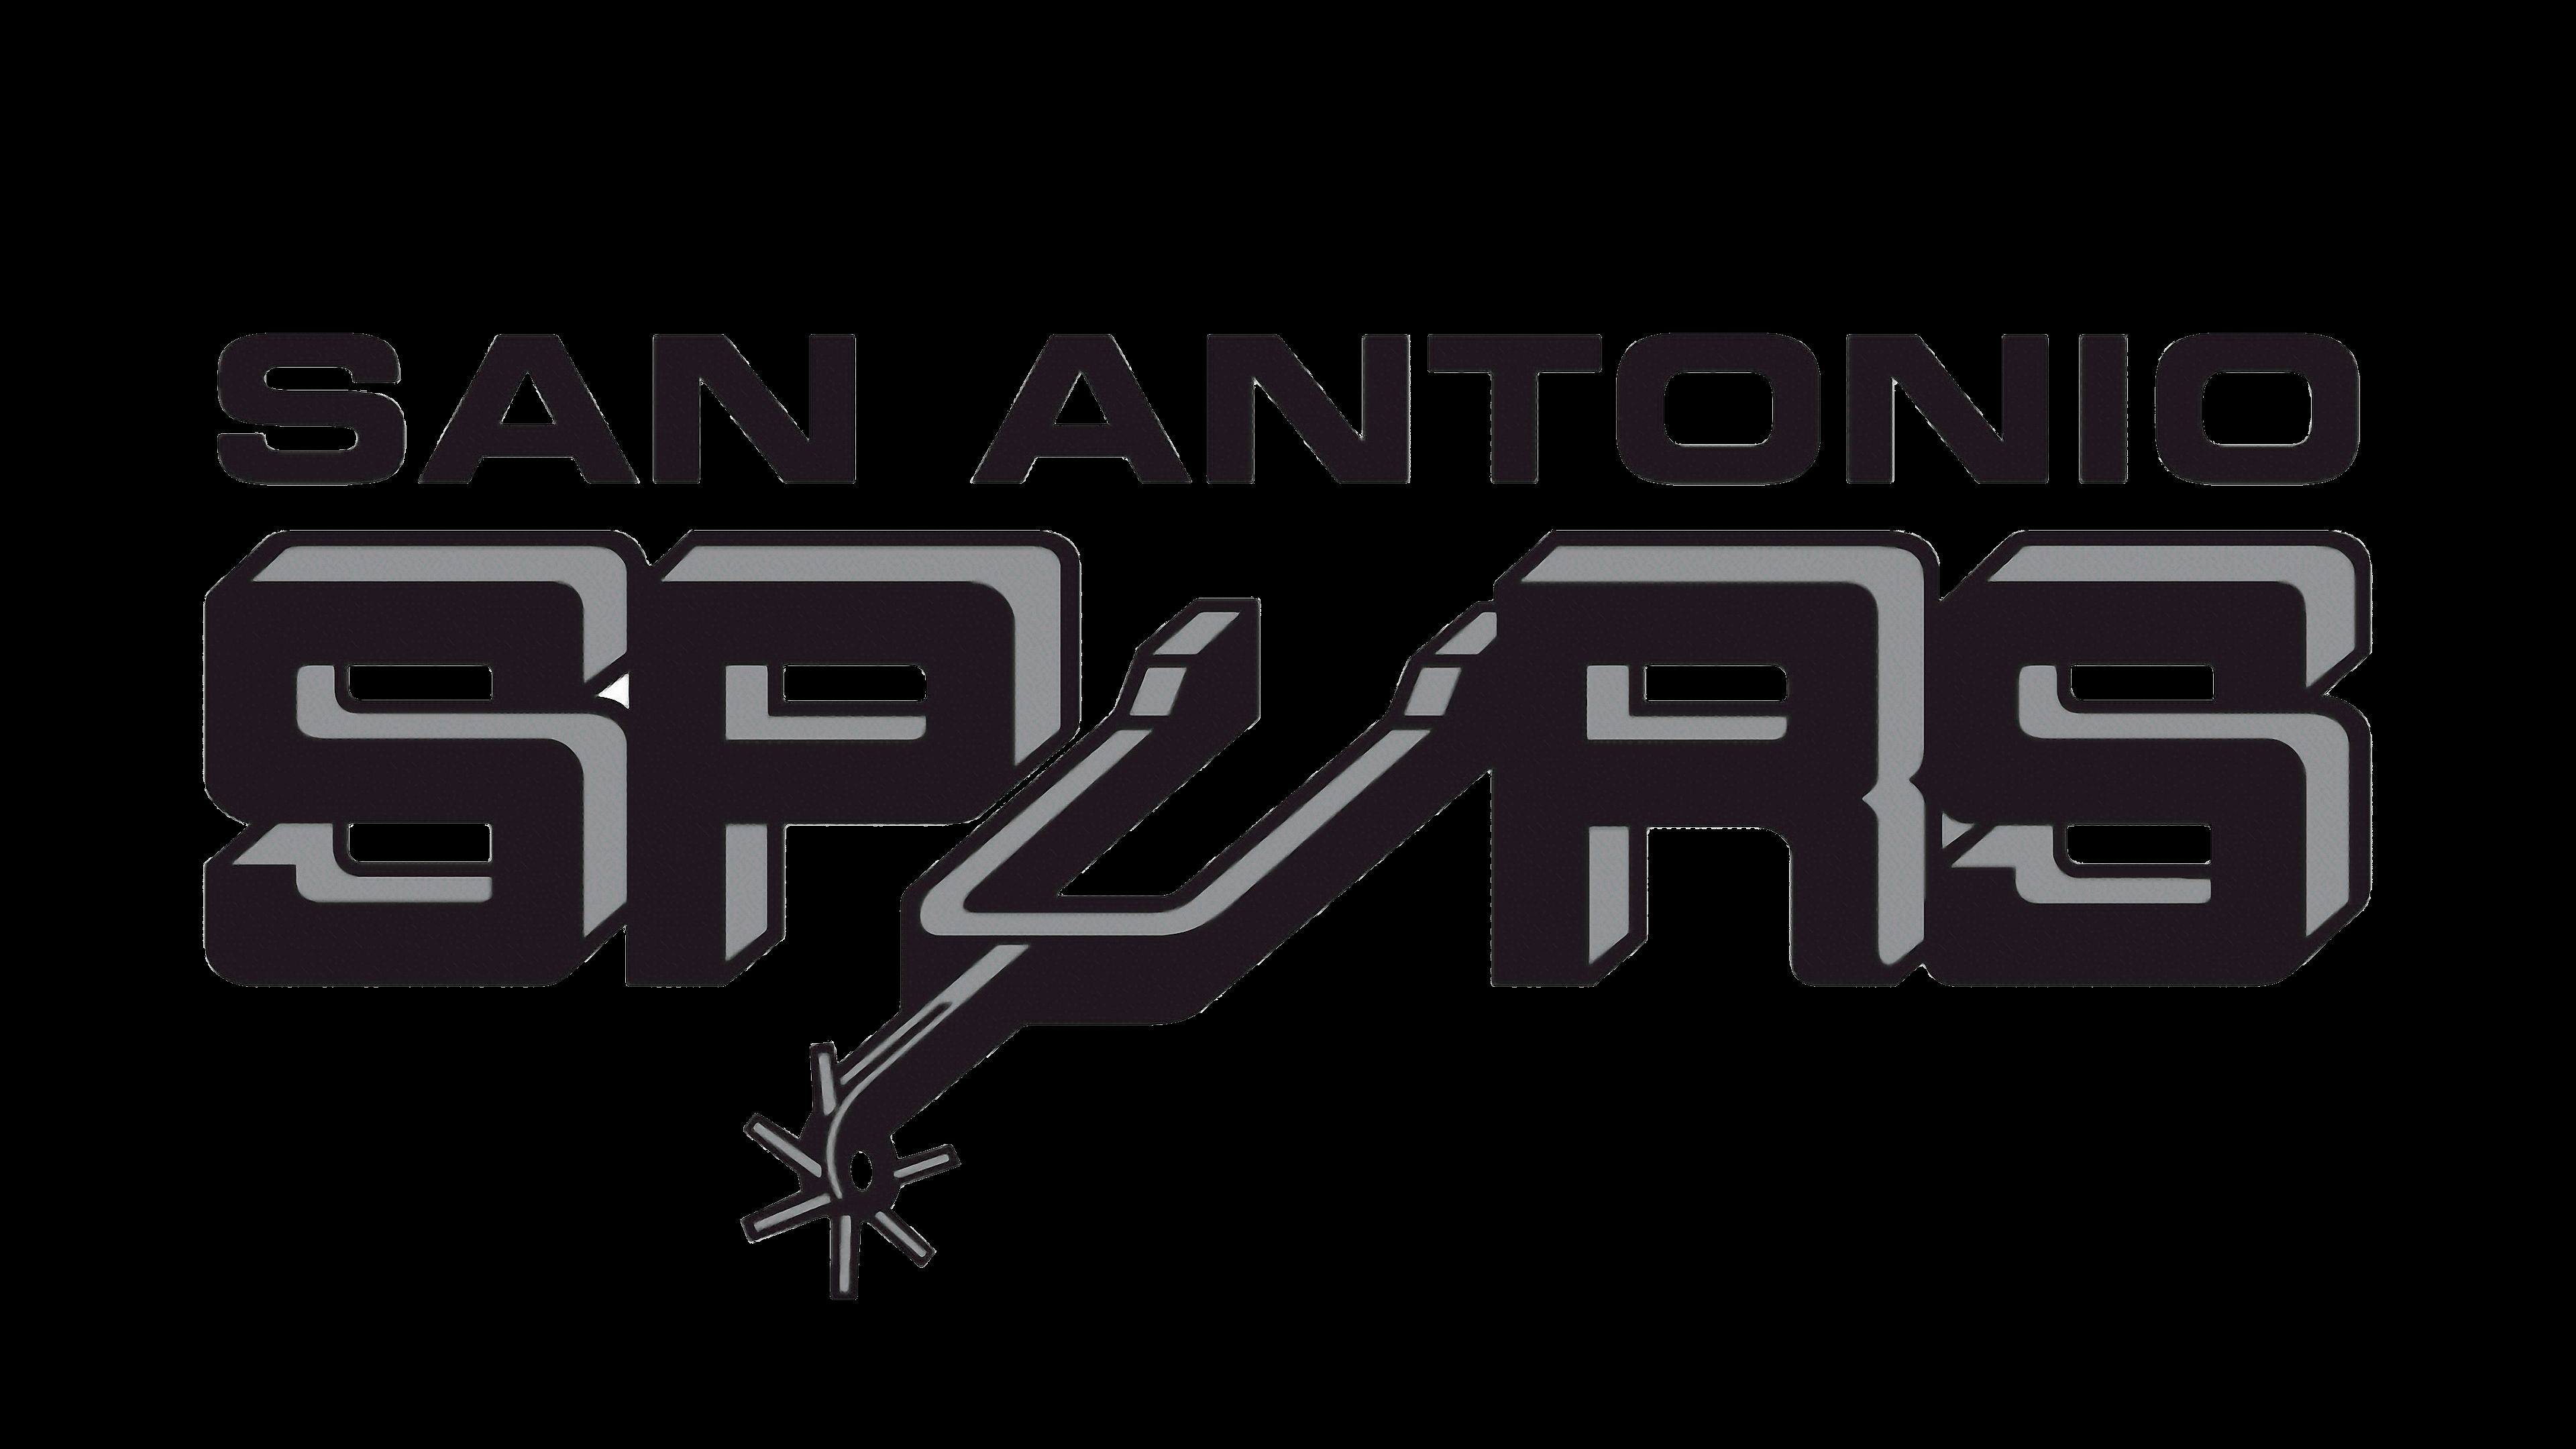 Handy-Wallpaper Sport, Basketball, Logo, Emblem, Kamm, Nba, San Antonio Spurs kostenlos herunterladen.